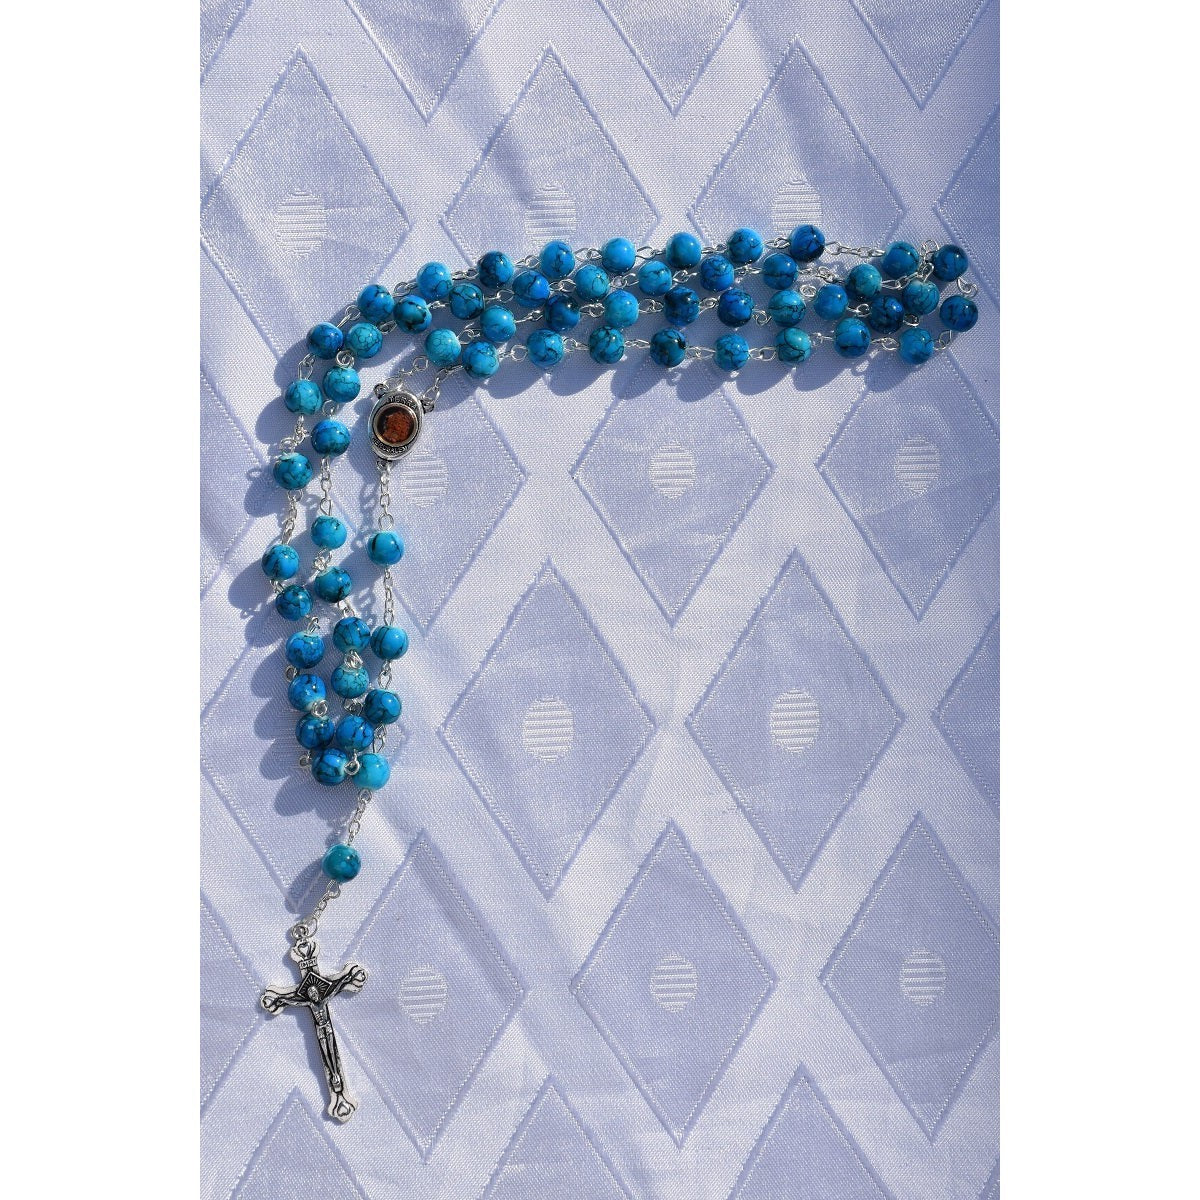 Rosary 59 Beads